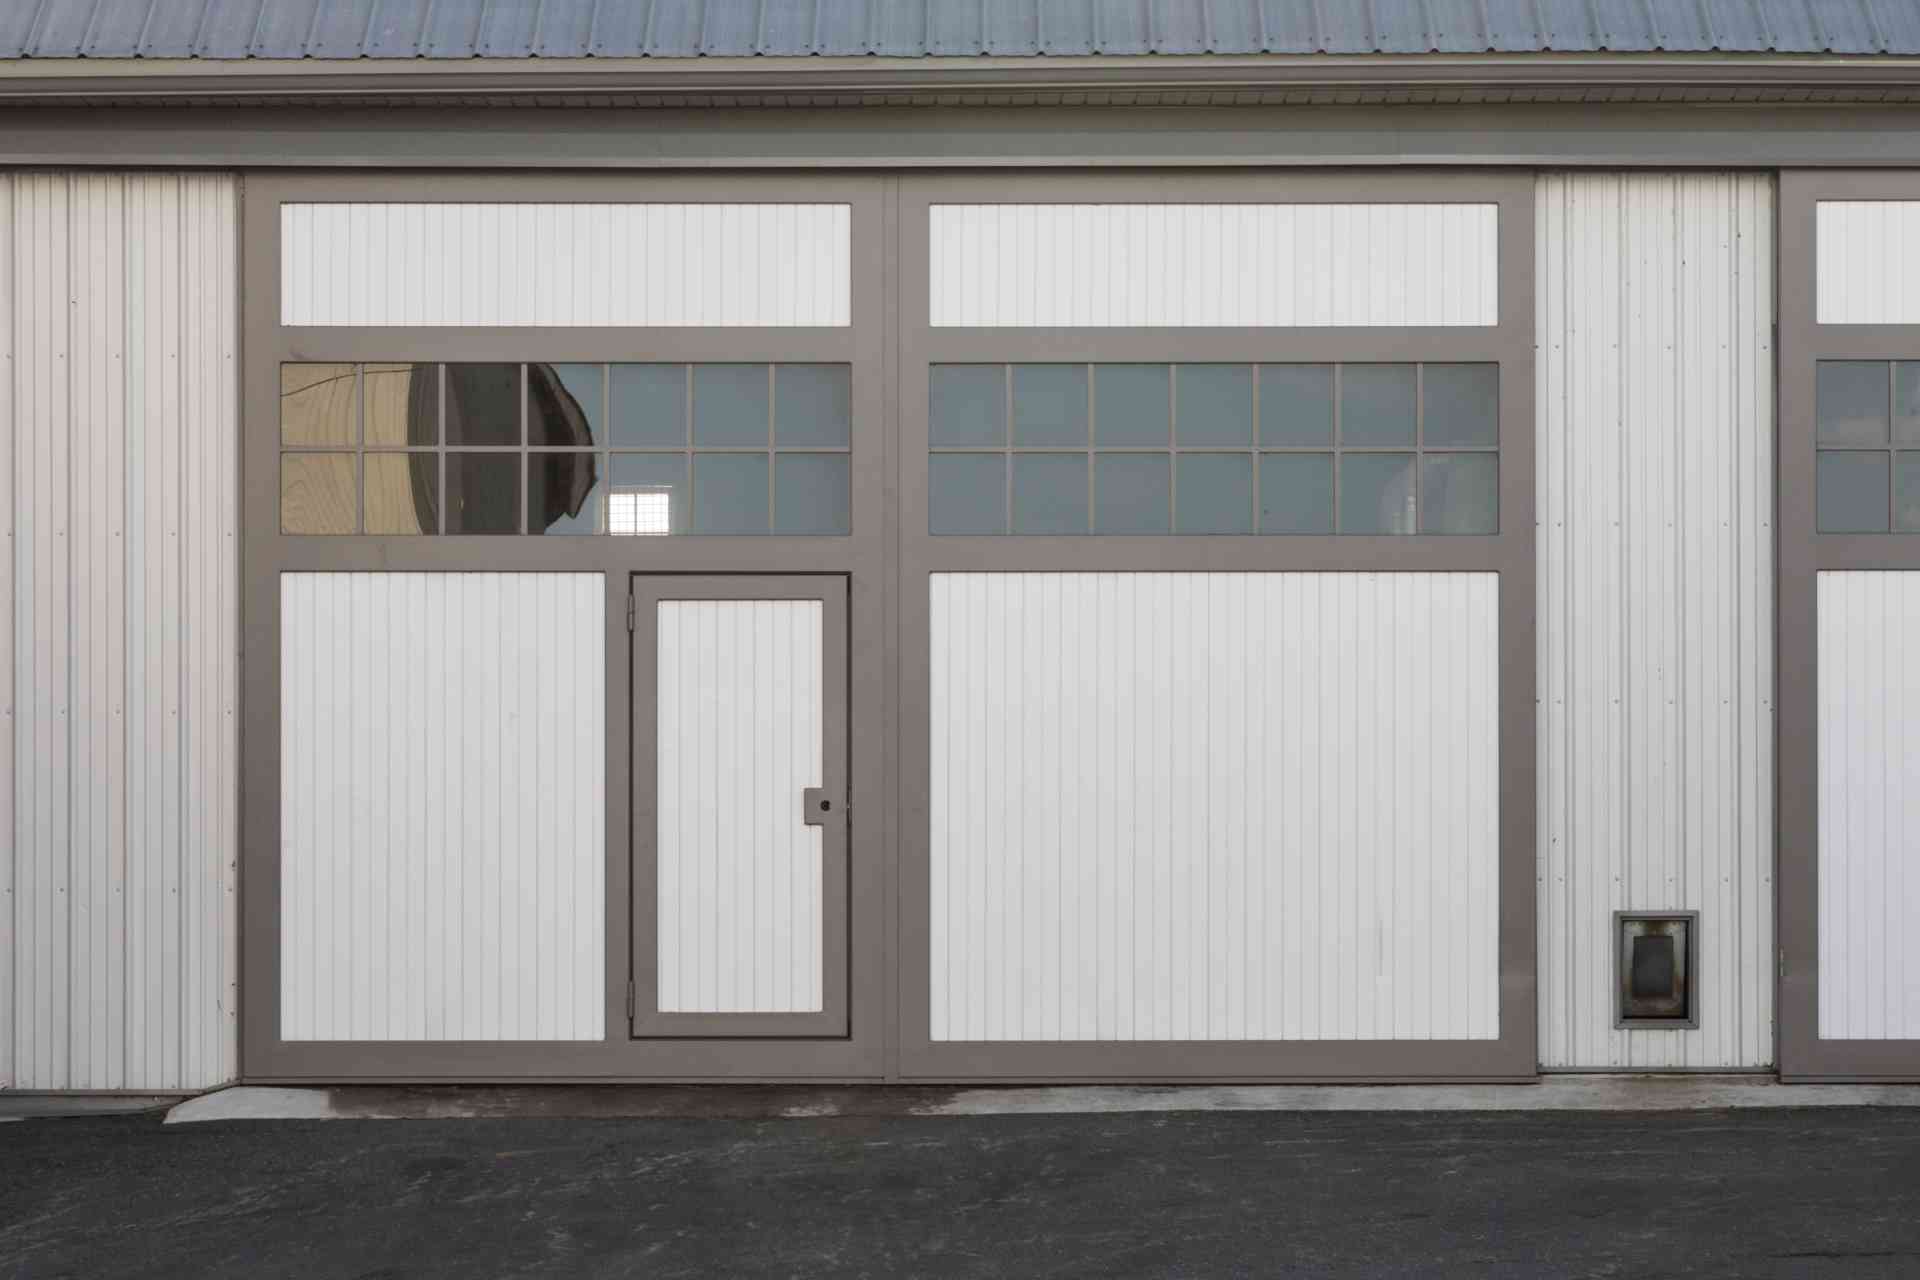 A barn exterior with single barn door